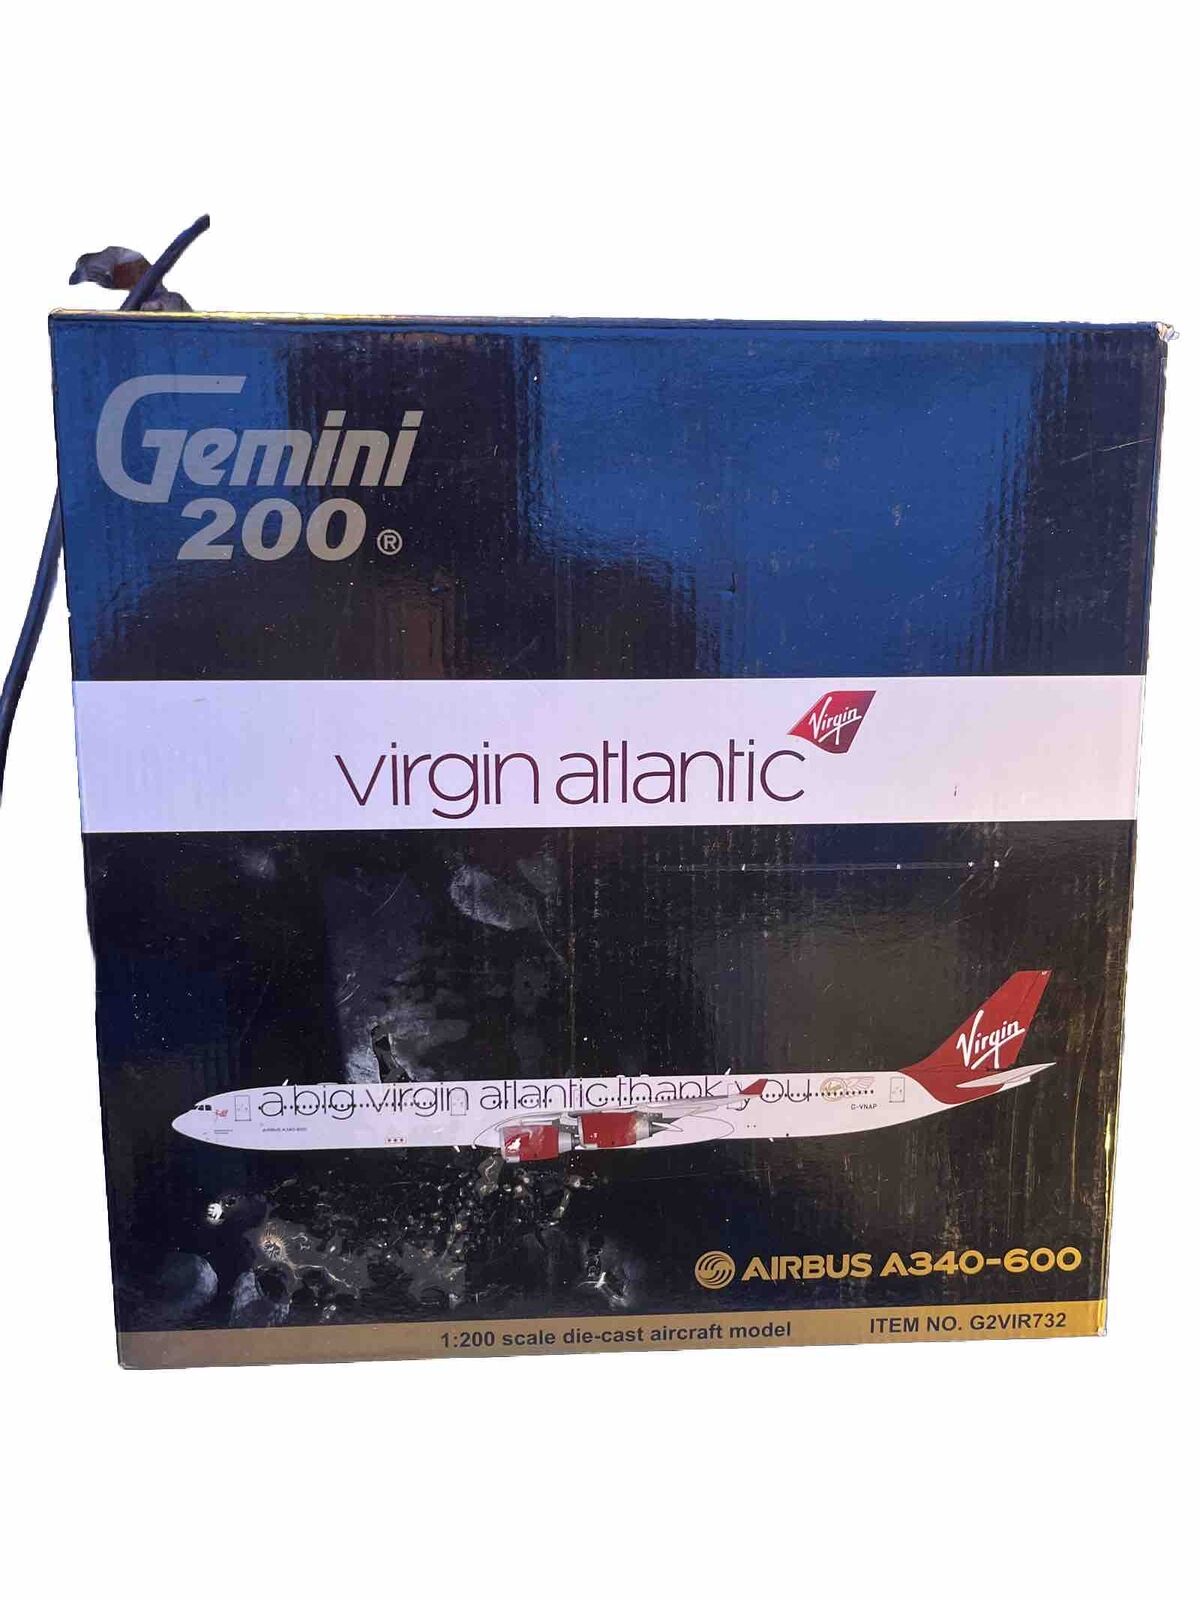 Gemini 200 virgin atlantic airbus A340-600 1:200 scales die cast aircraft model